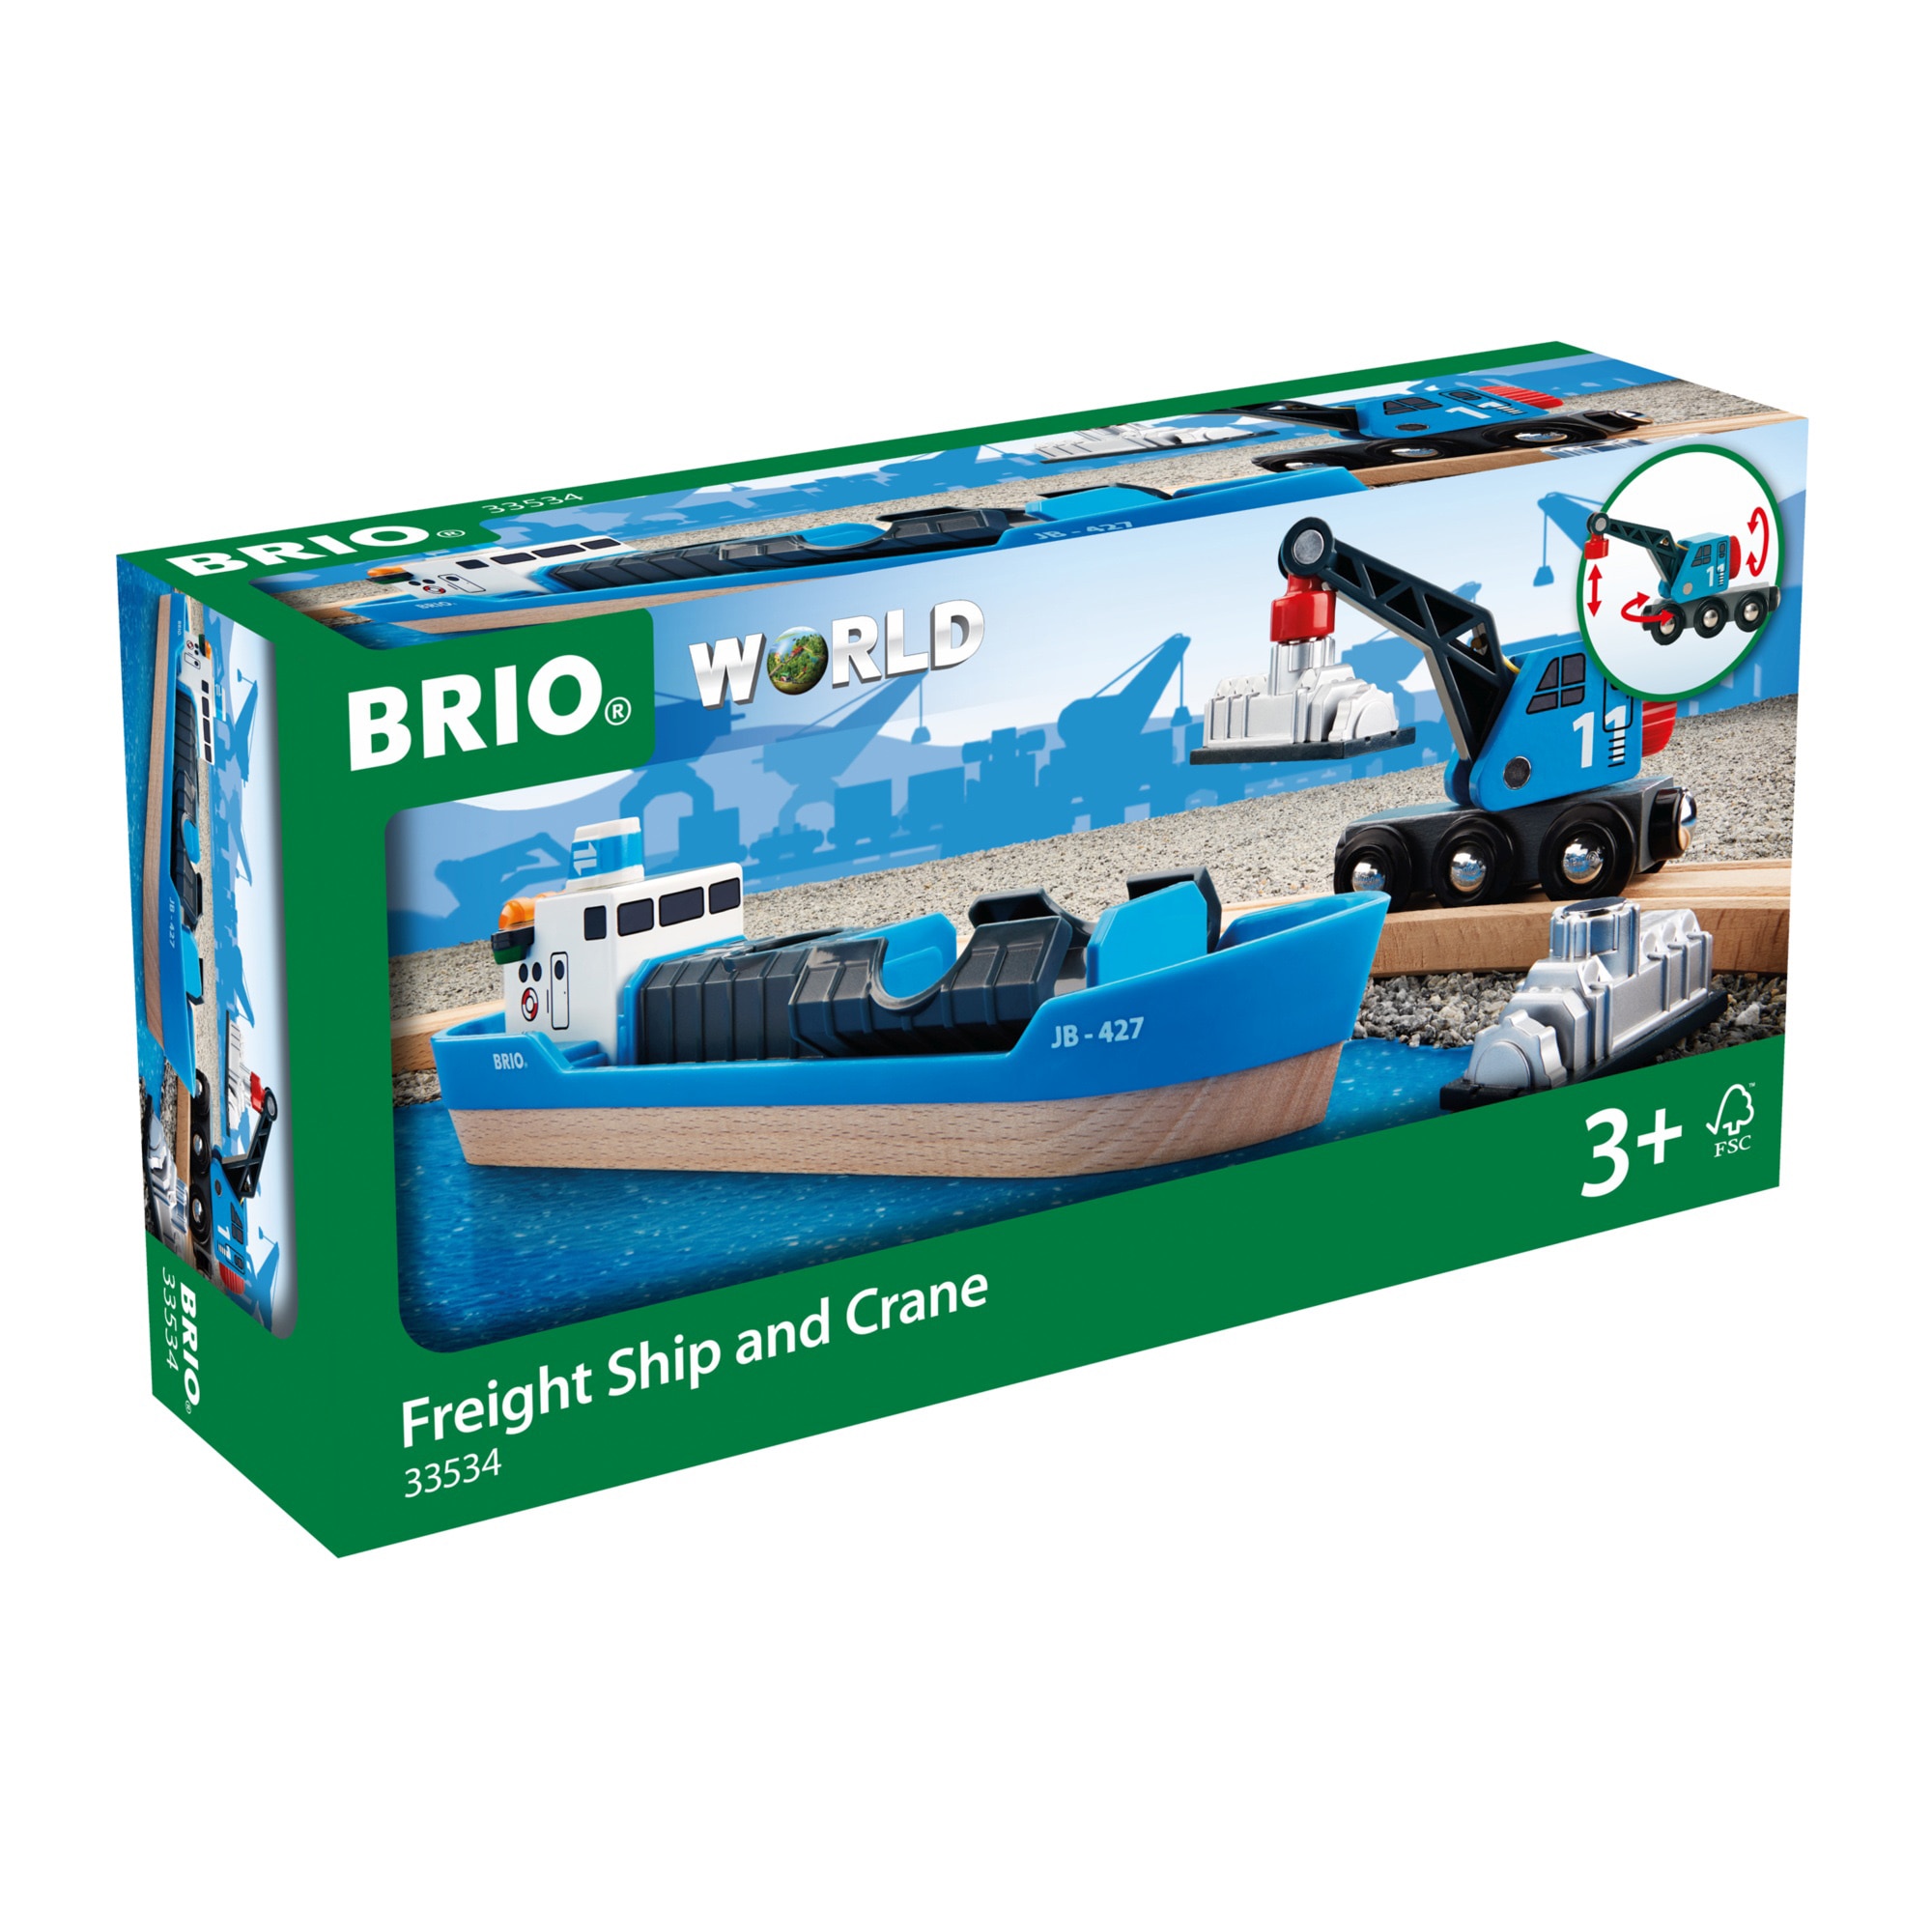 Set de joaca - Container and Crane Wagon | Brio